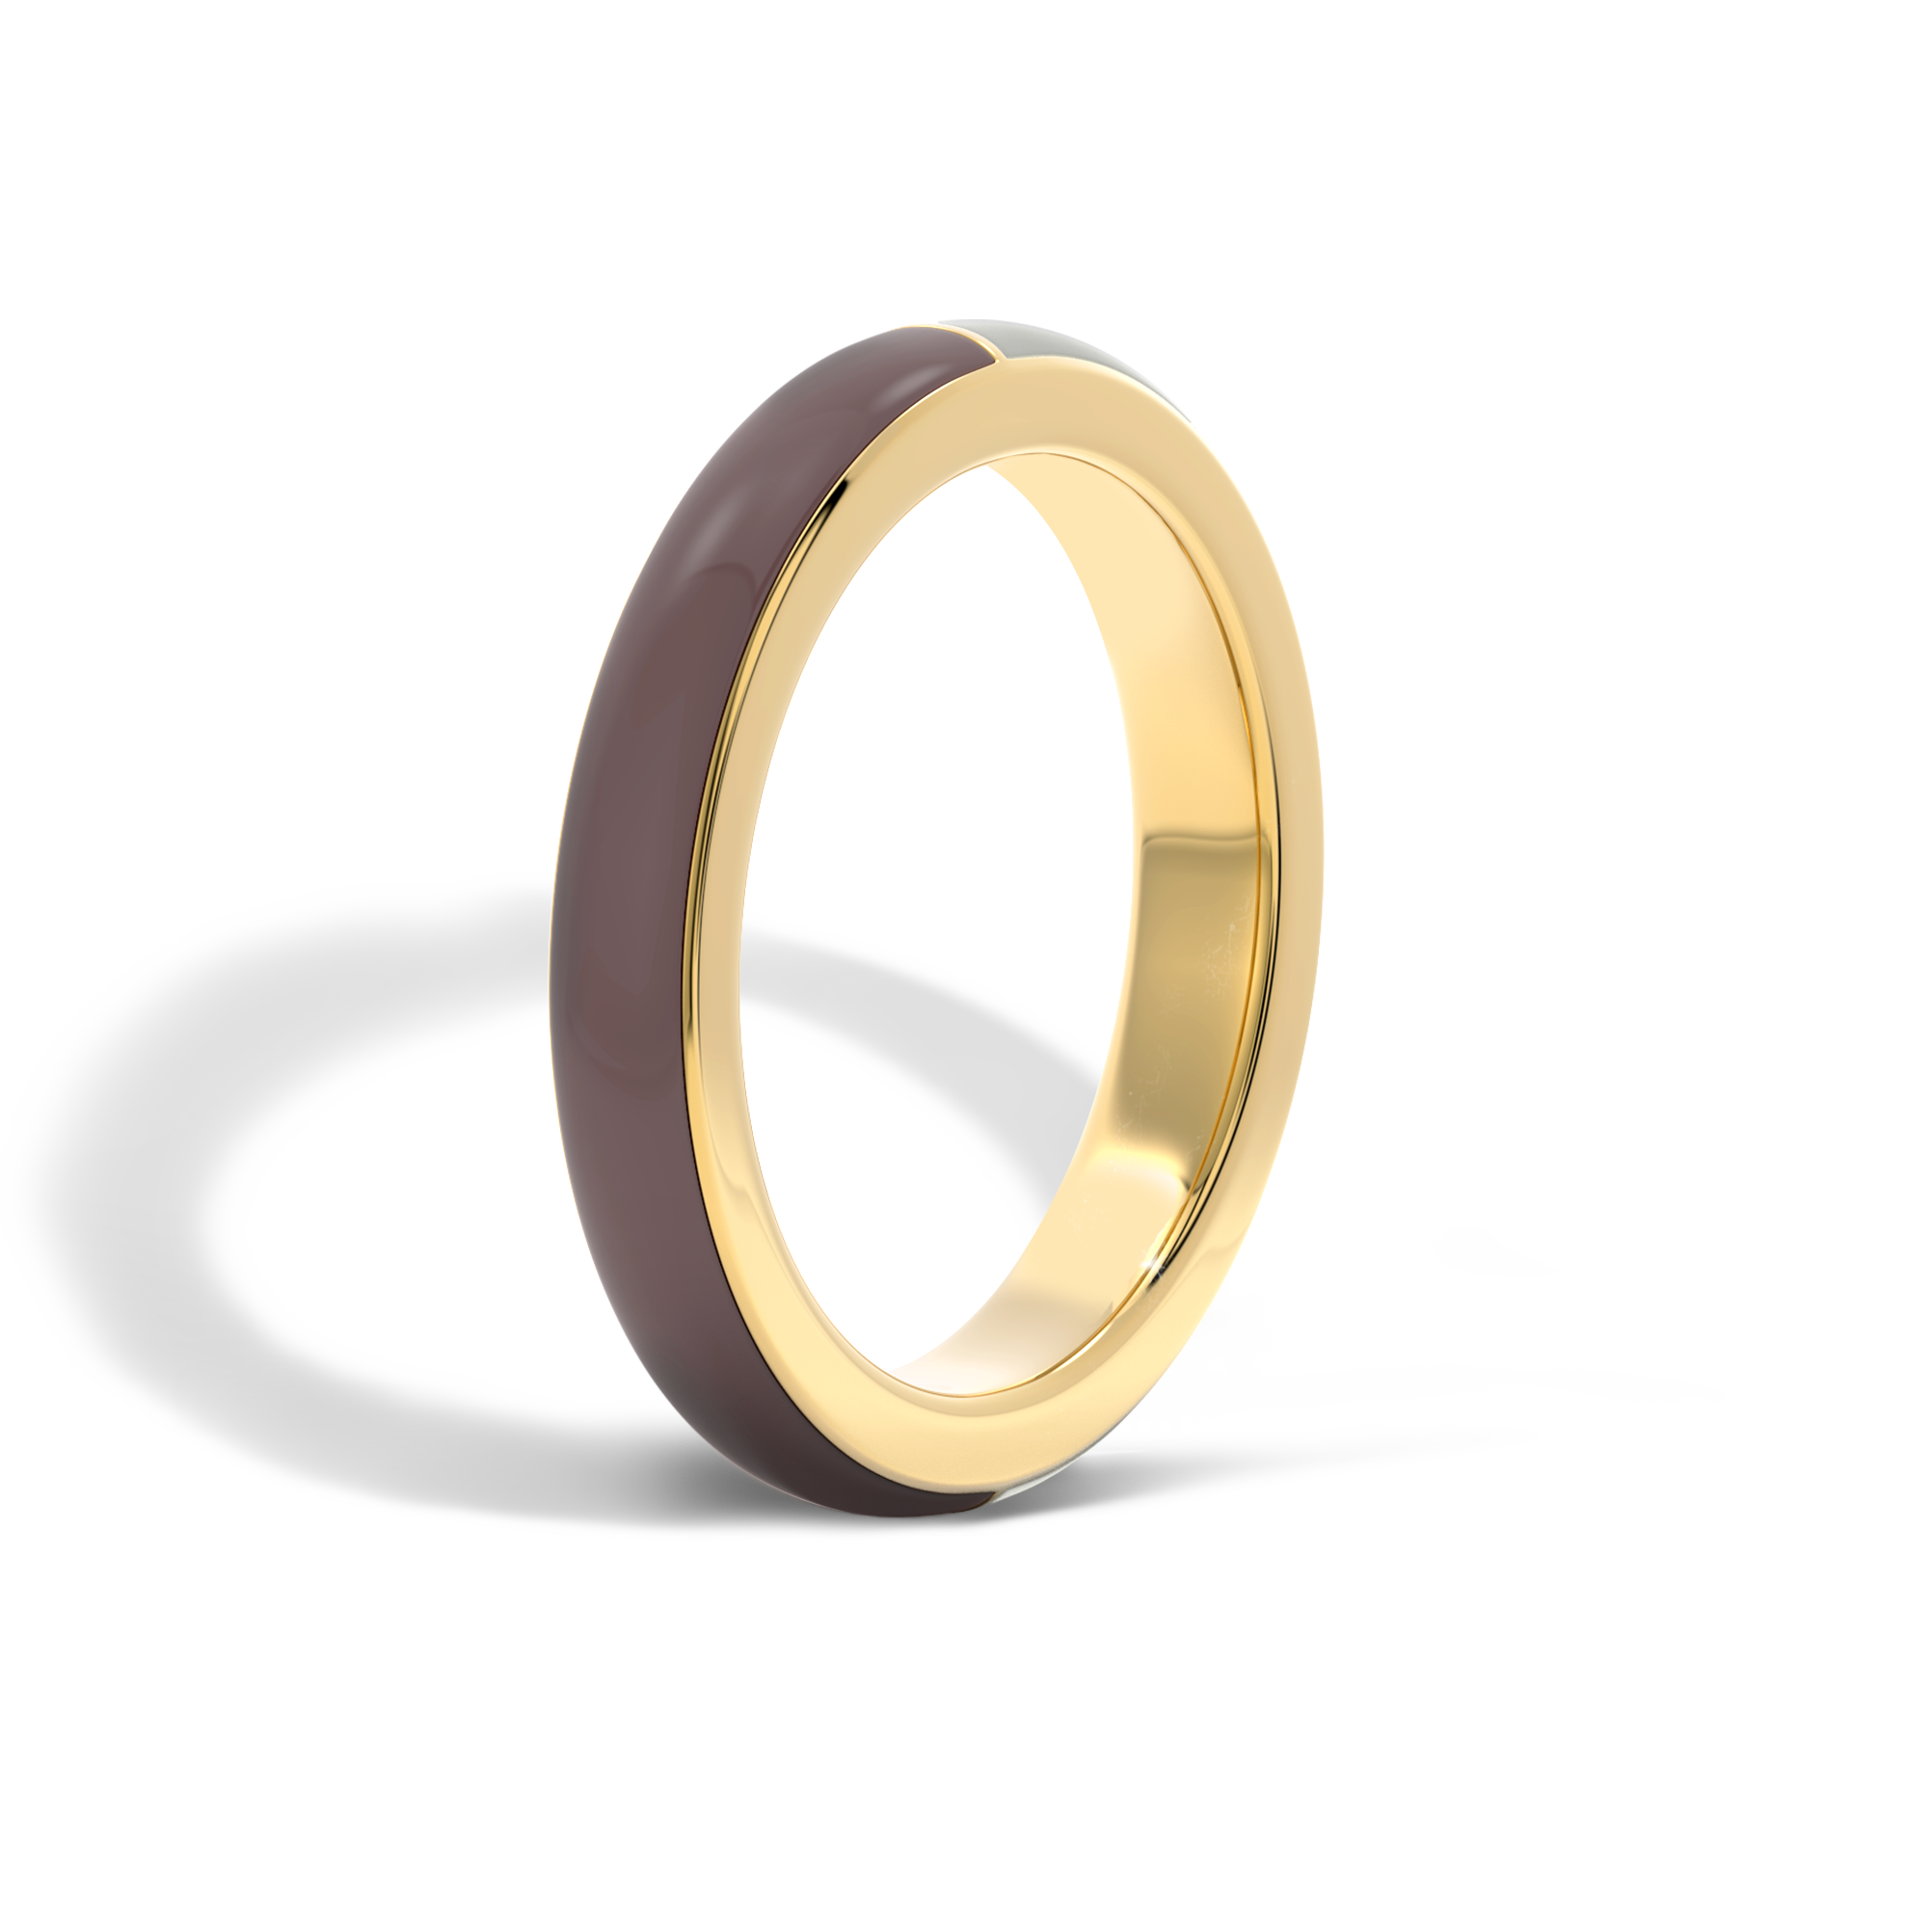 The Chocolate & Vanilla Enamel Ring